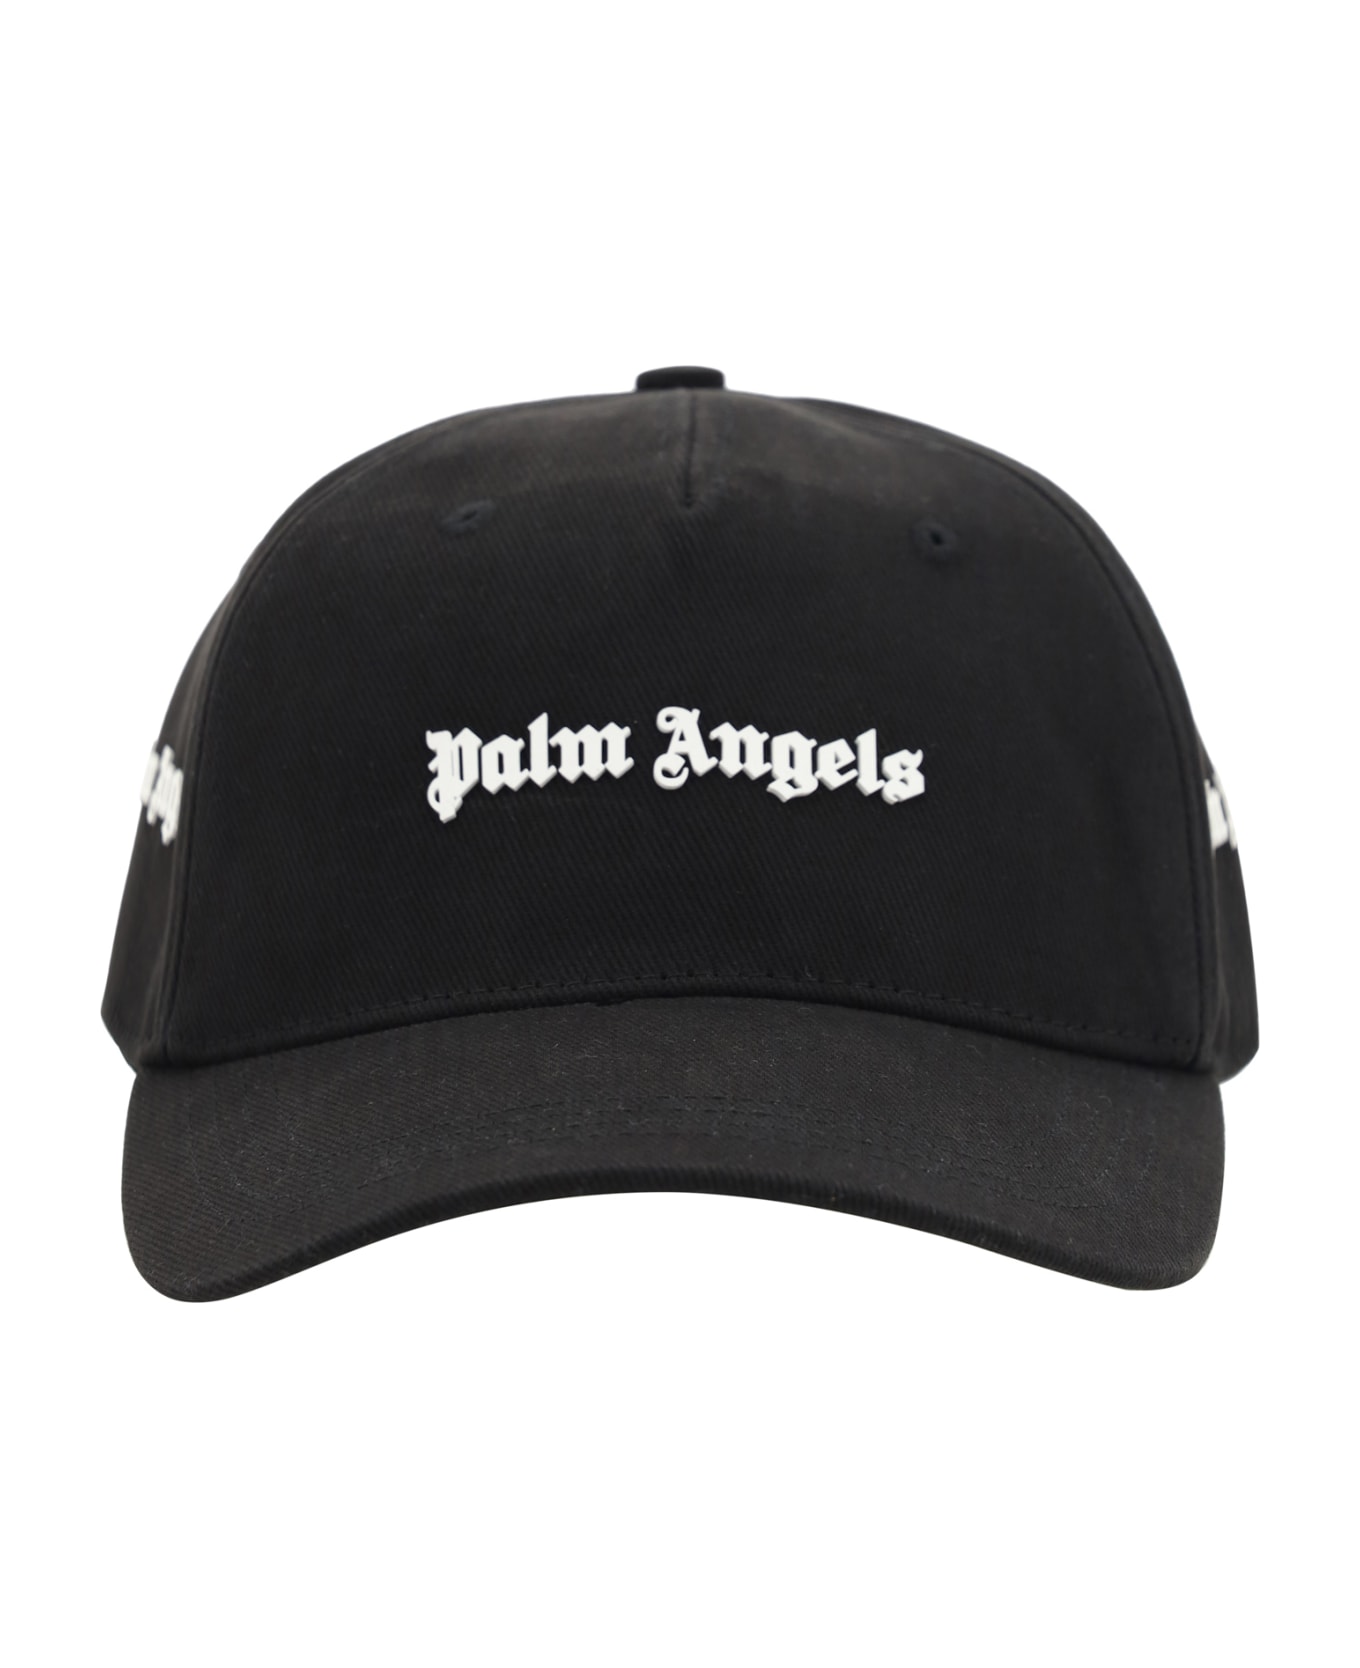 Palm Angels Baseball Cap - Black Whit